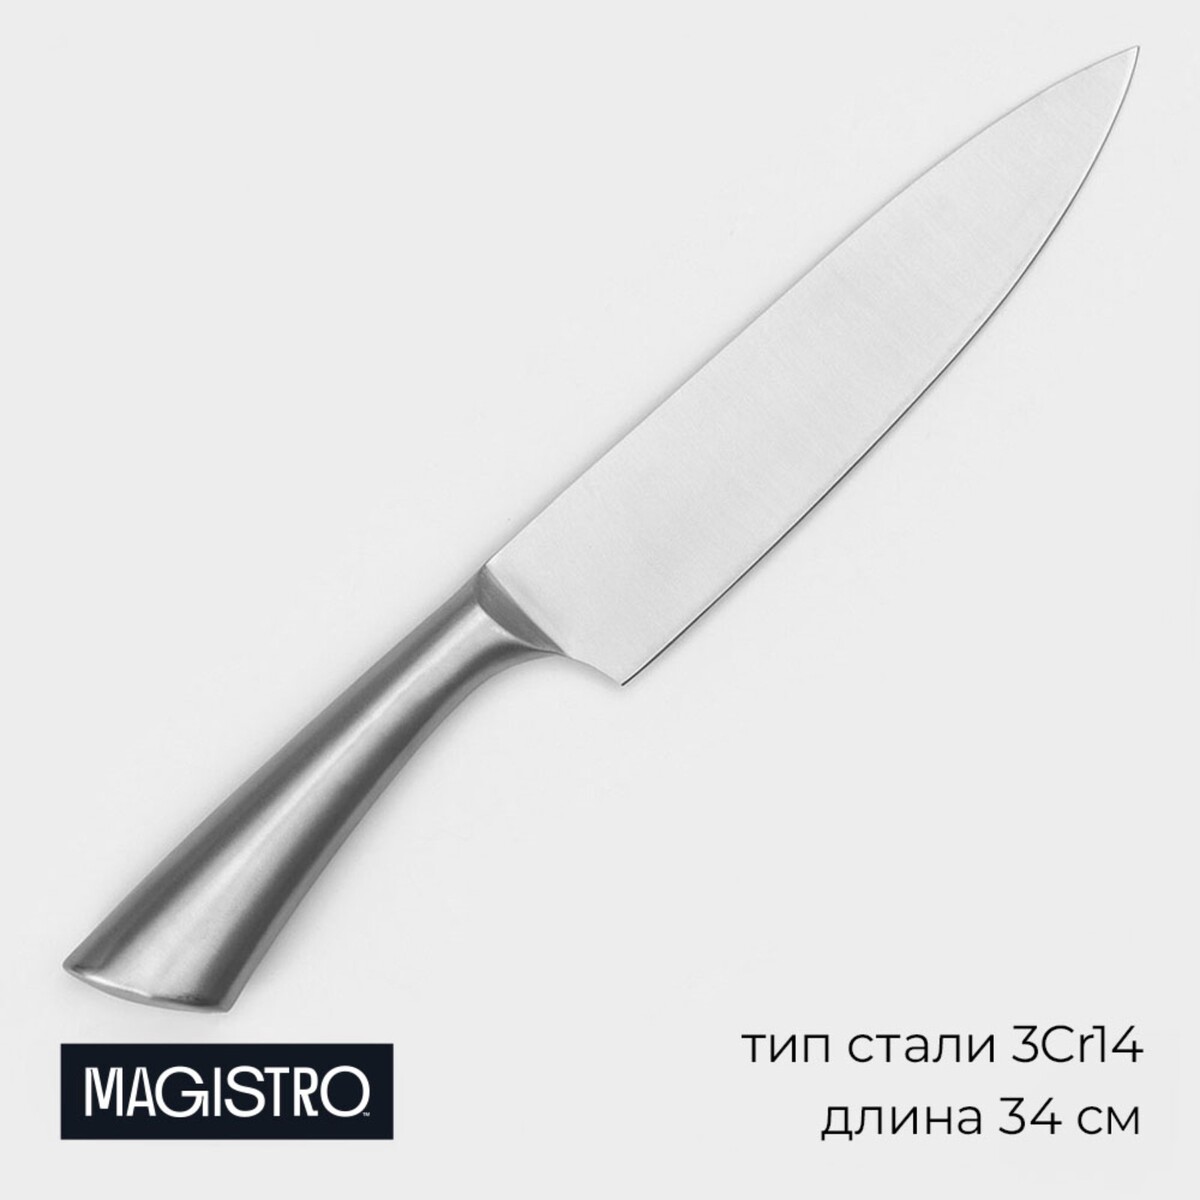 Нож - шеф magistro ardone, лезвие 20 см, цвет серебристый нож кухонный magistro ardone лезвие 12 5 см серебристый